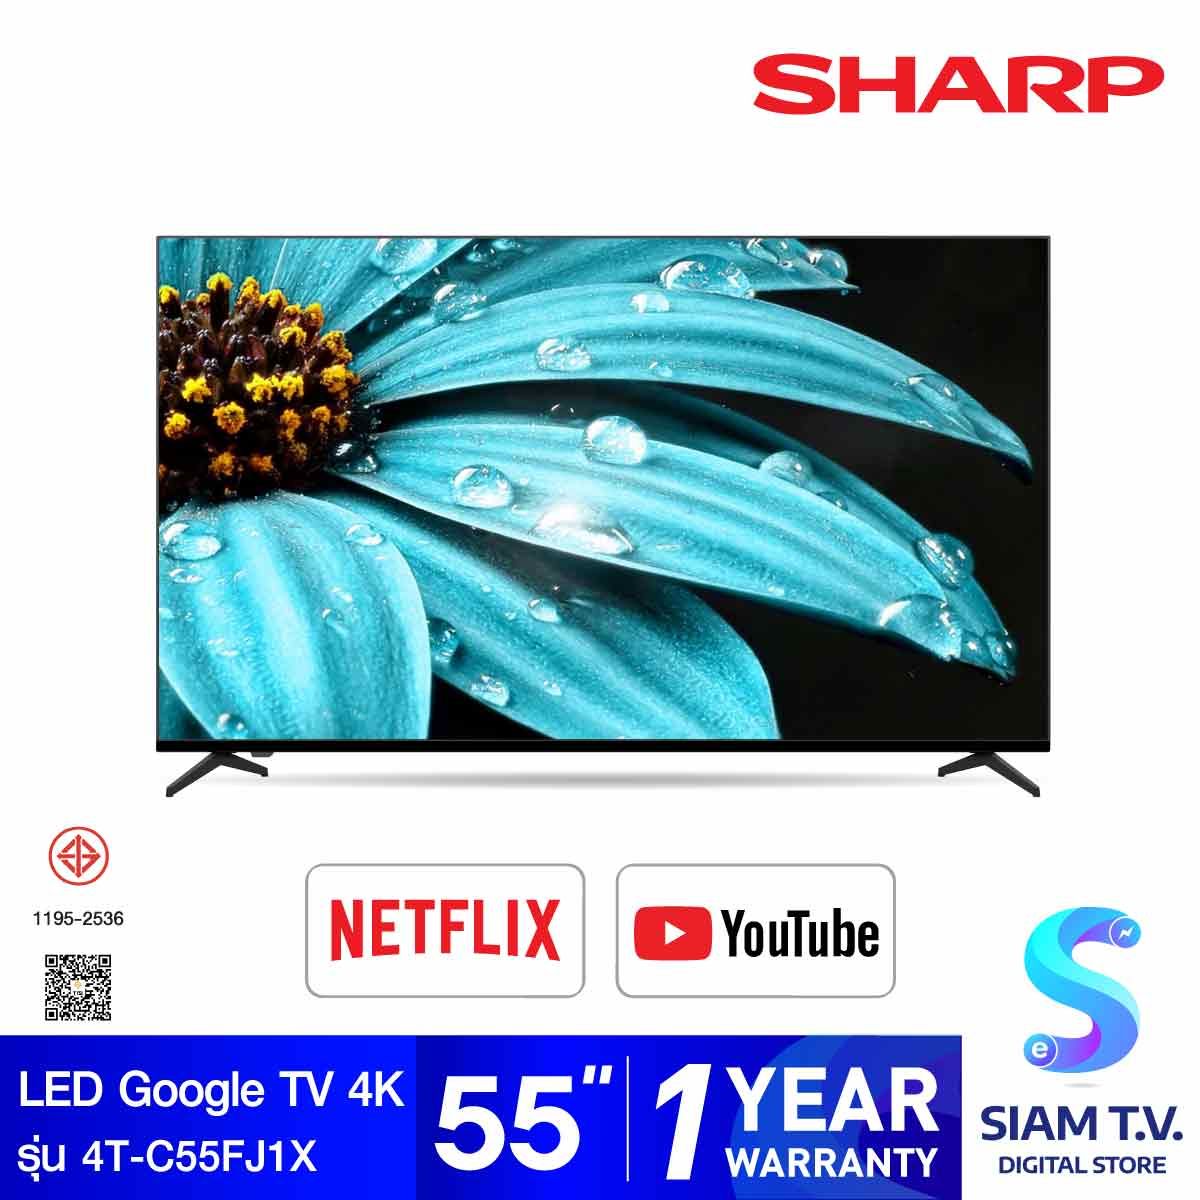 SHARP Google TV AQUOS 4K รุ่น C55FJ1Xสมาร์ททีวีขนาด 55 นิ้ว